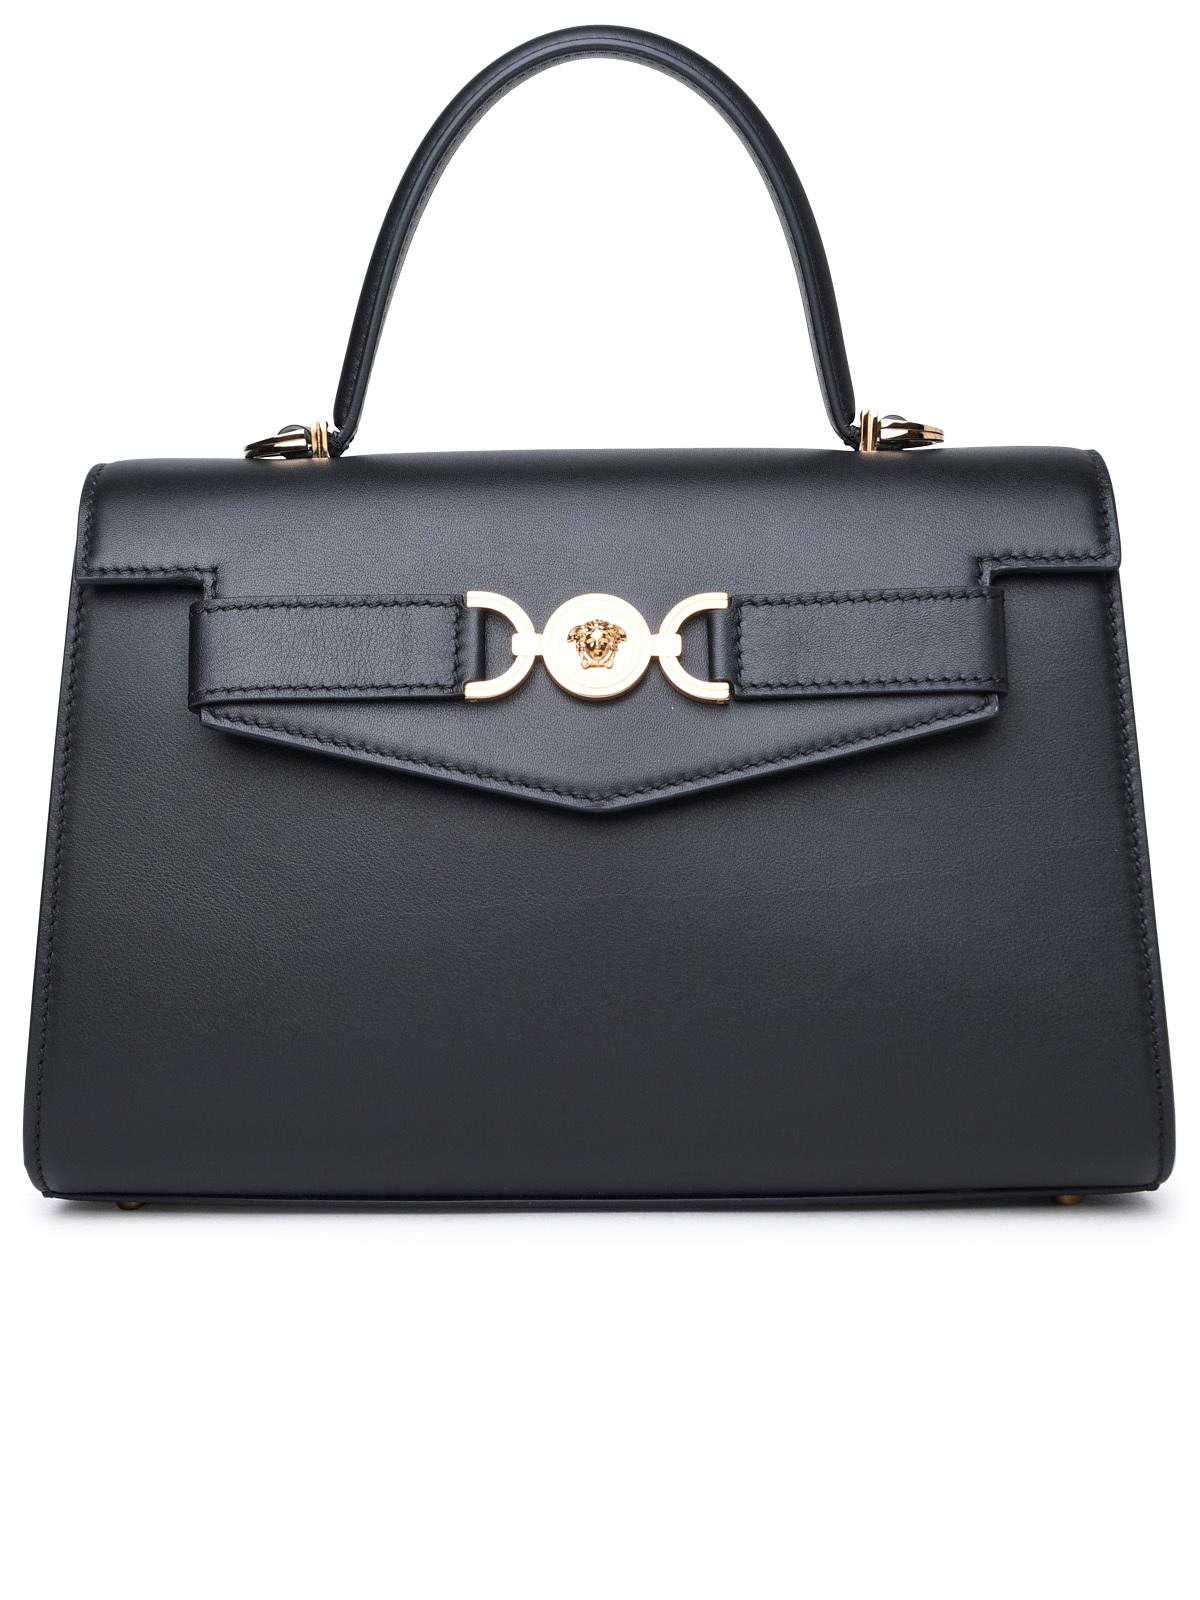 Versace Woman Versace Medium 'Medusa '95' Black Leather Bag